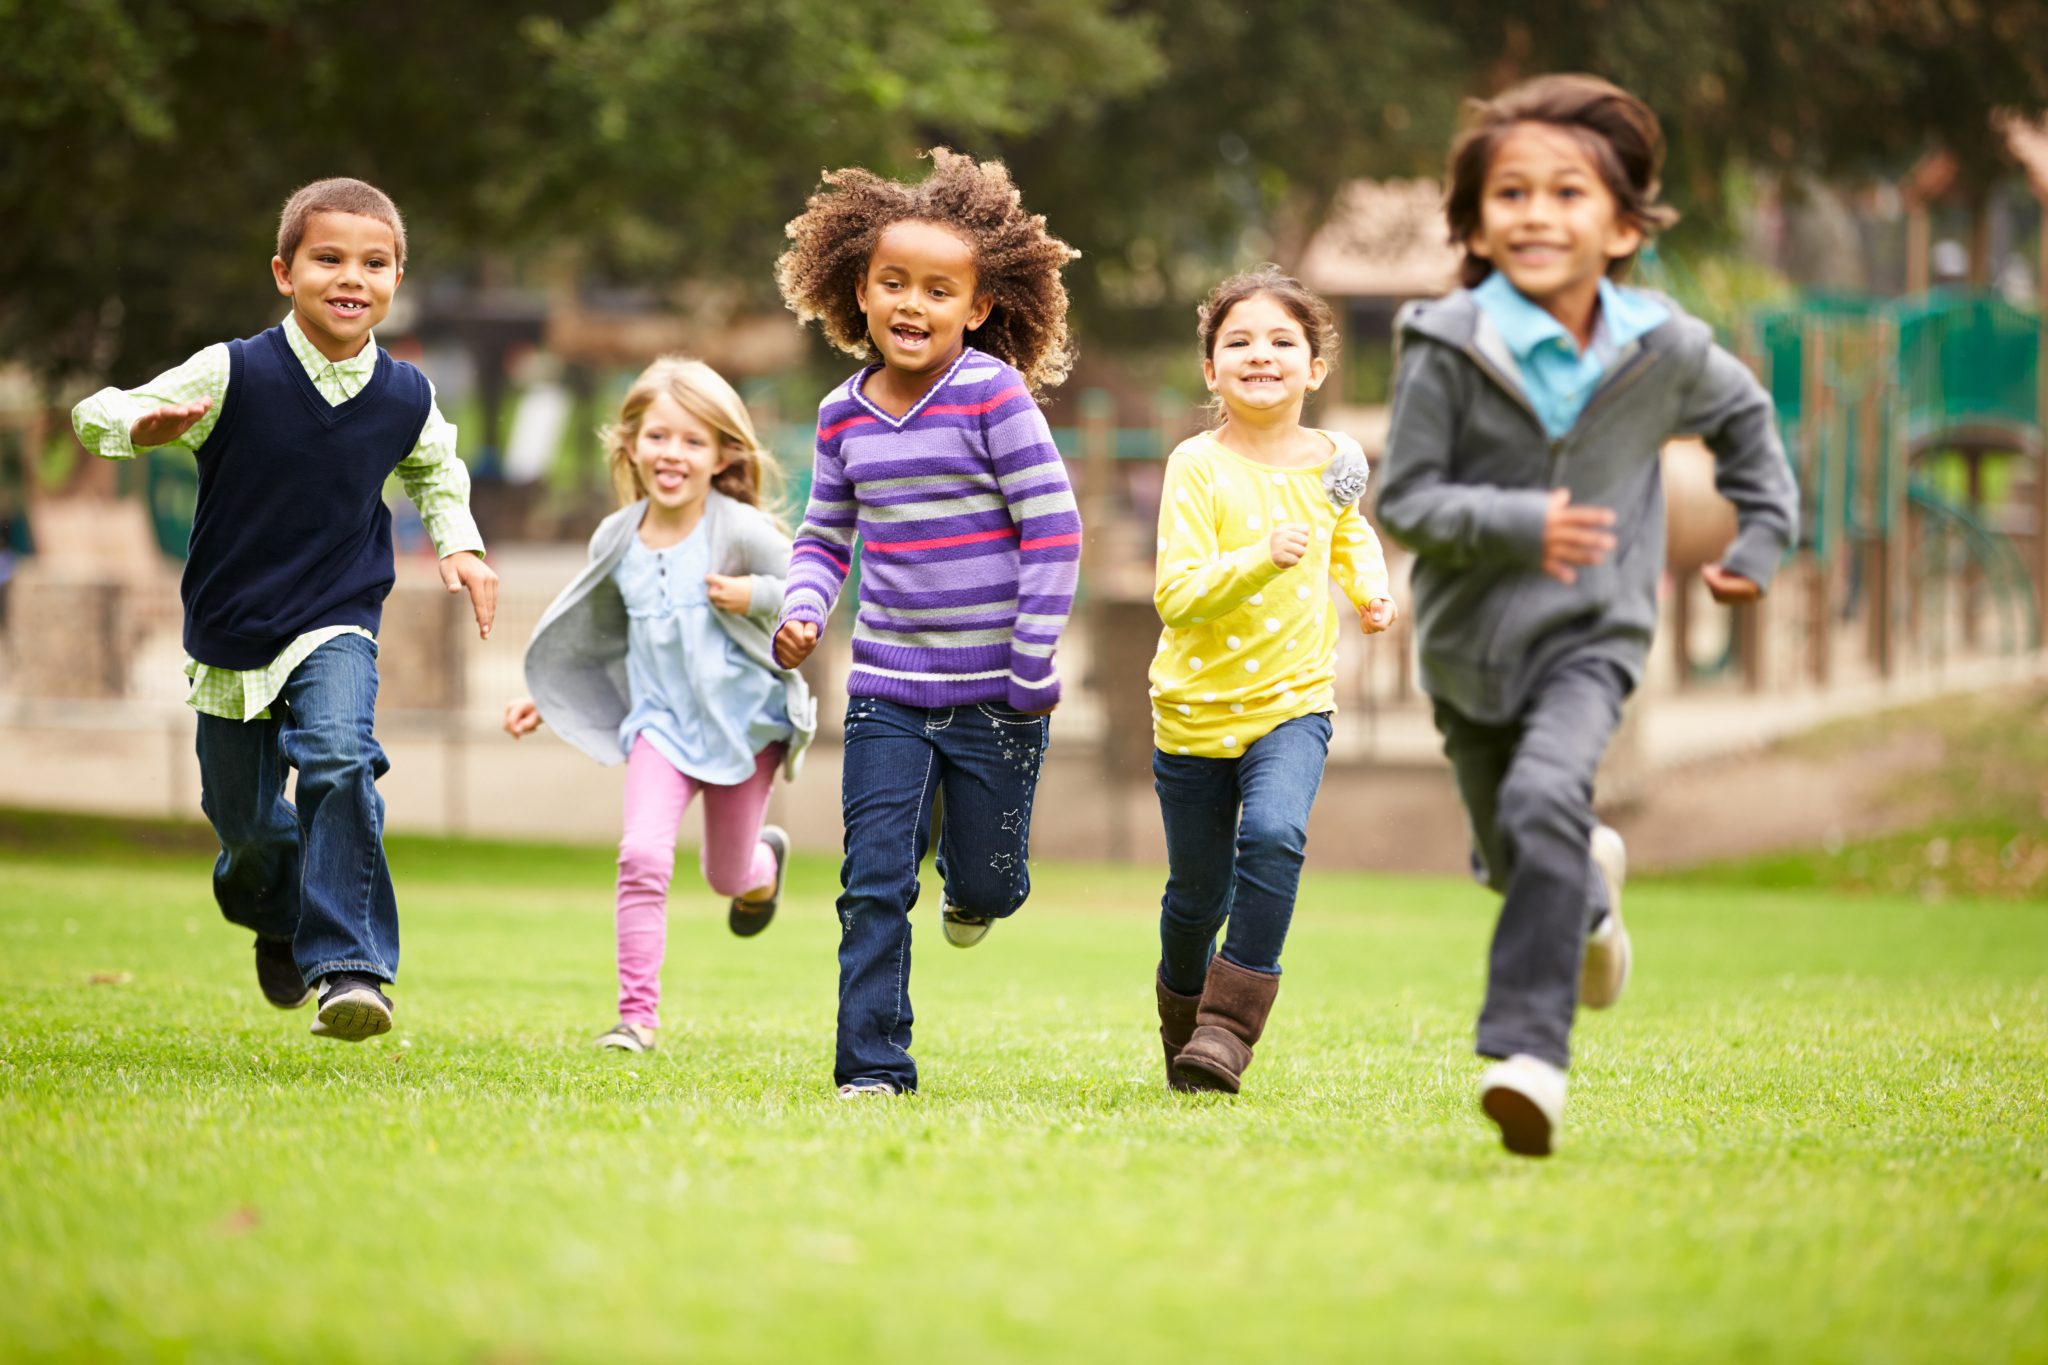 Group of children running in the park.